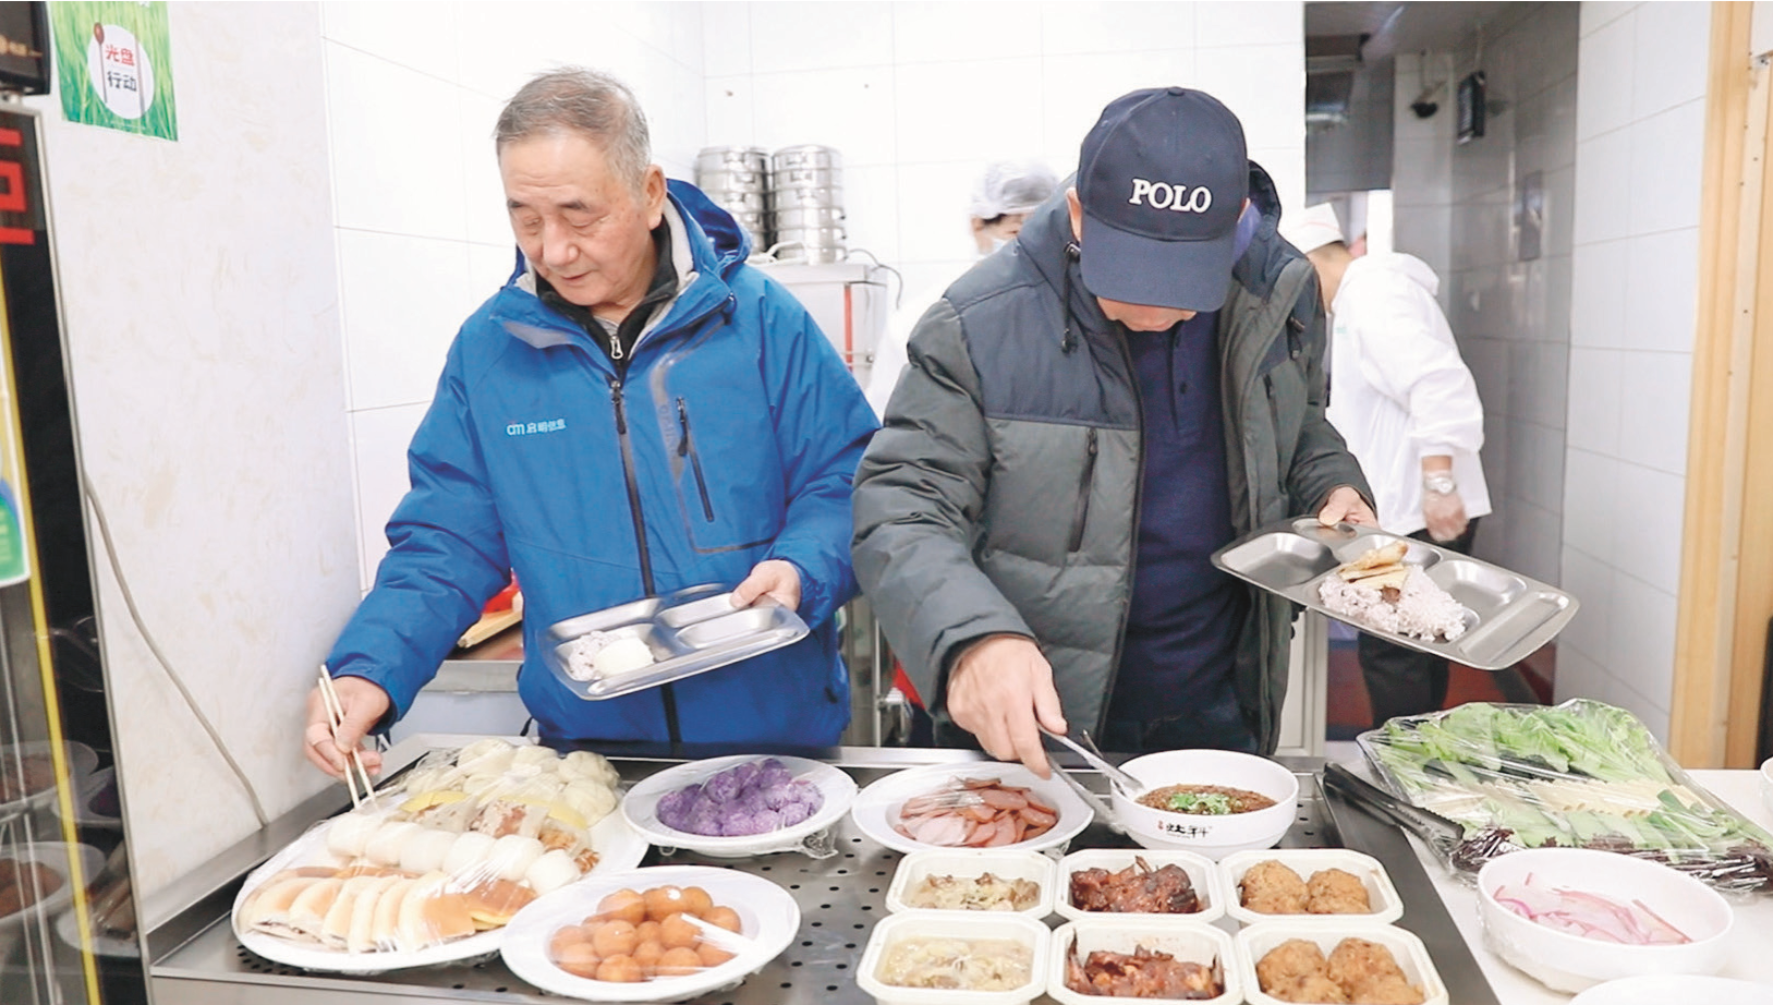 Senior Citizens Enjoy Great Food on Their Doorstep